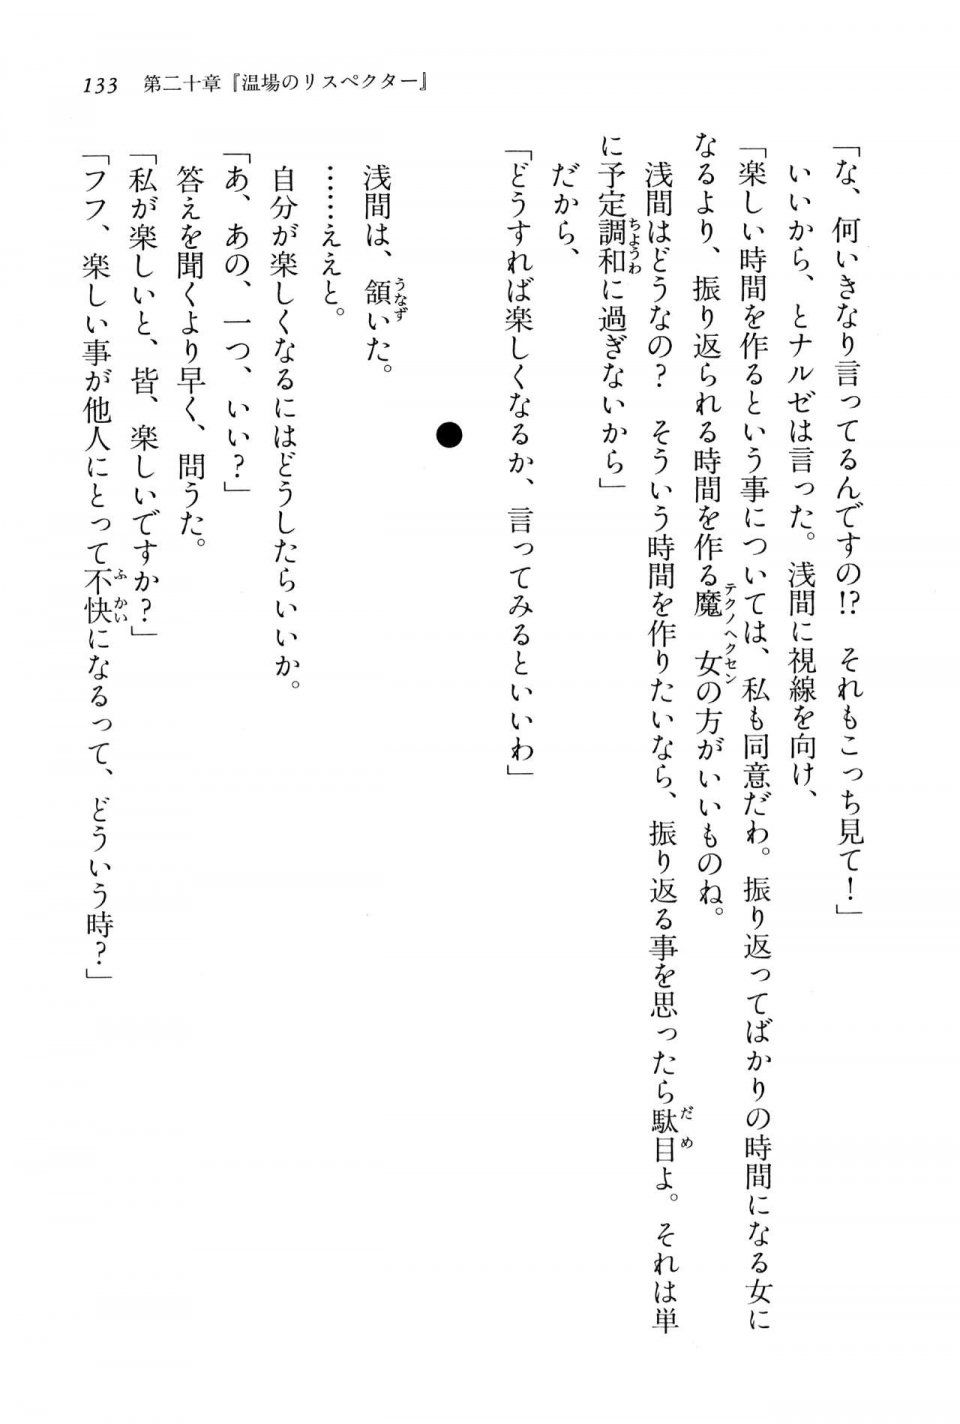 Kyoukai Senjou no Horizon BD Special Mininovel Vol 4(2B) - Photo #137